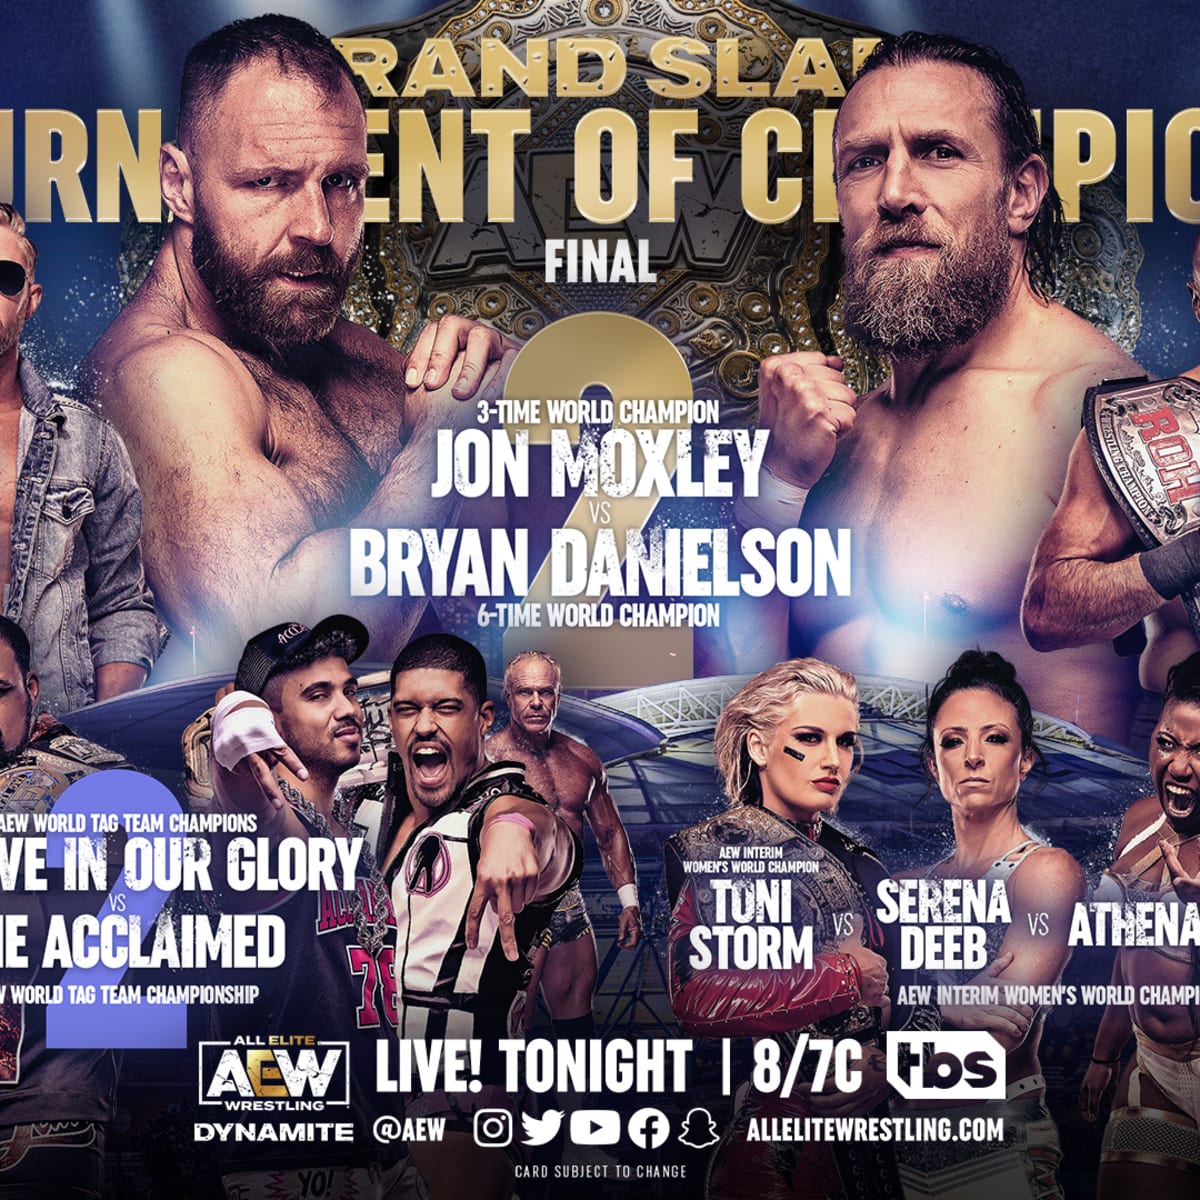  AEW Dynamite Grand Slam: A Modern-Day Clash of the Champions